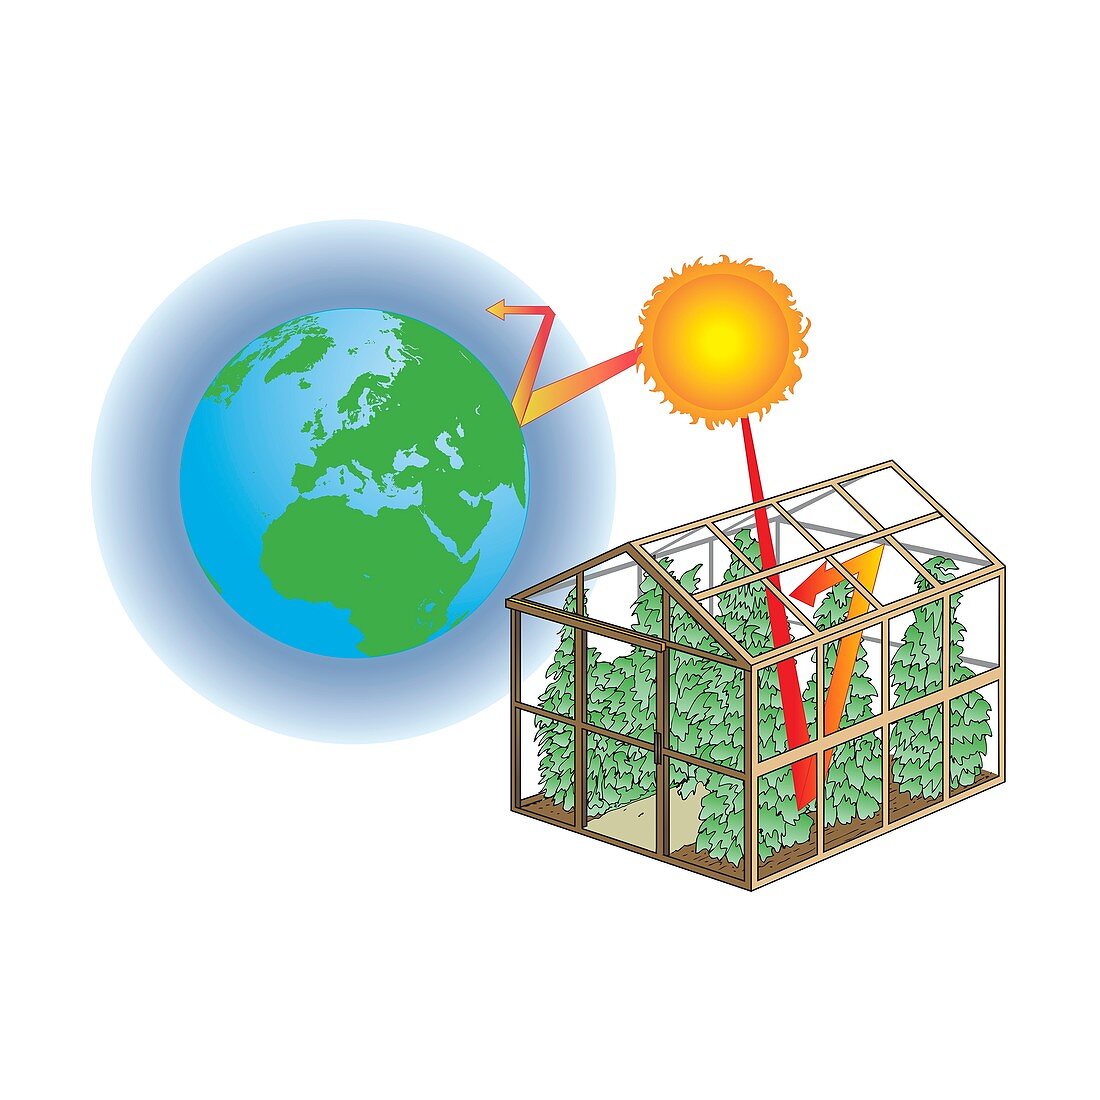 Greenhouse effect, illustration